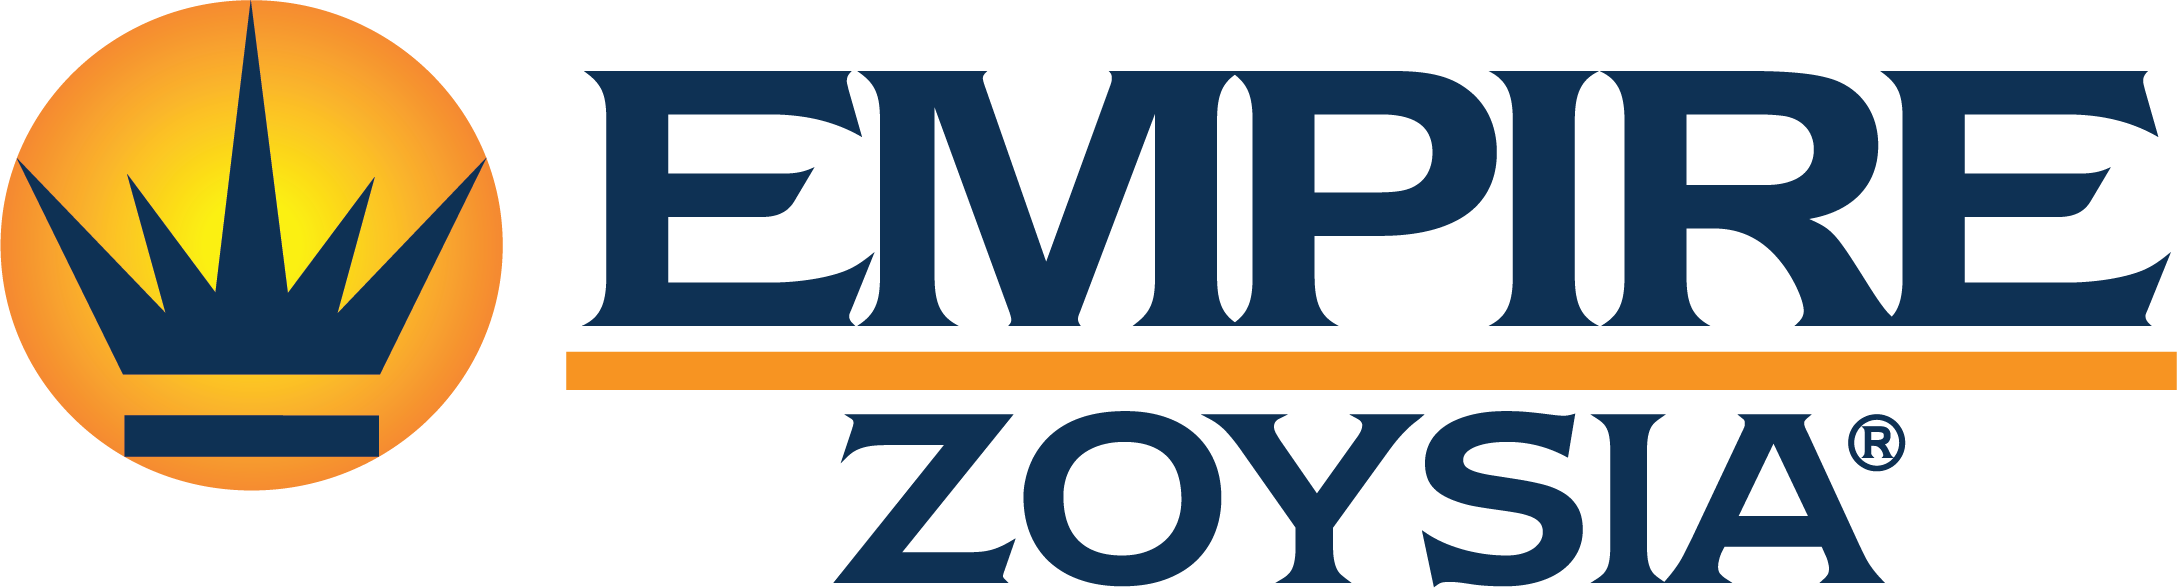 Empire Zoysia Logo (1)